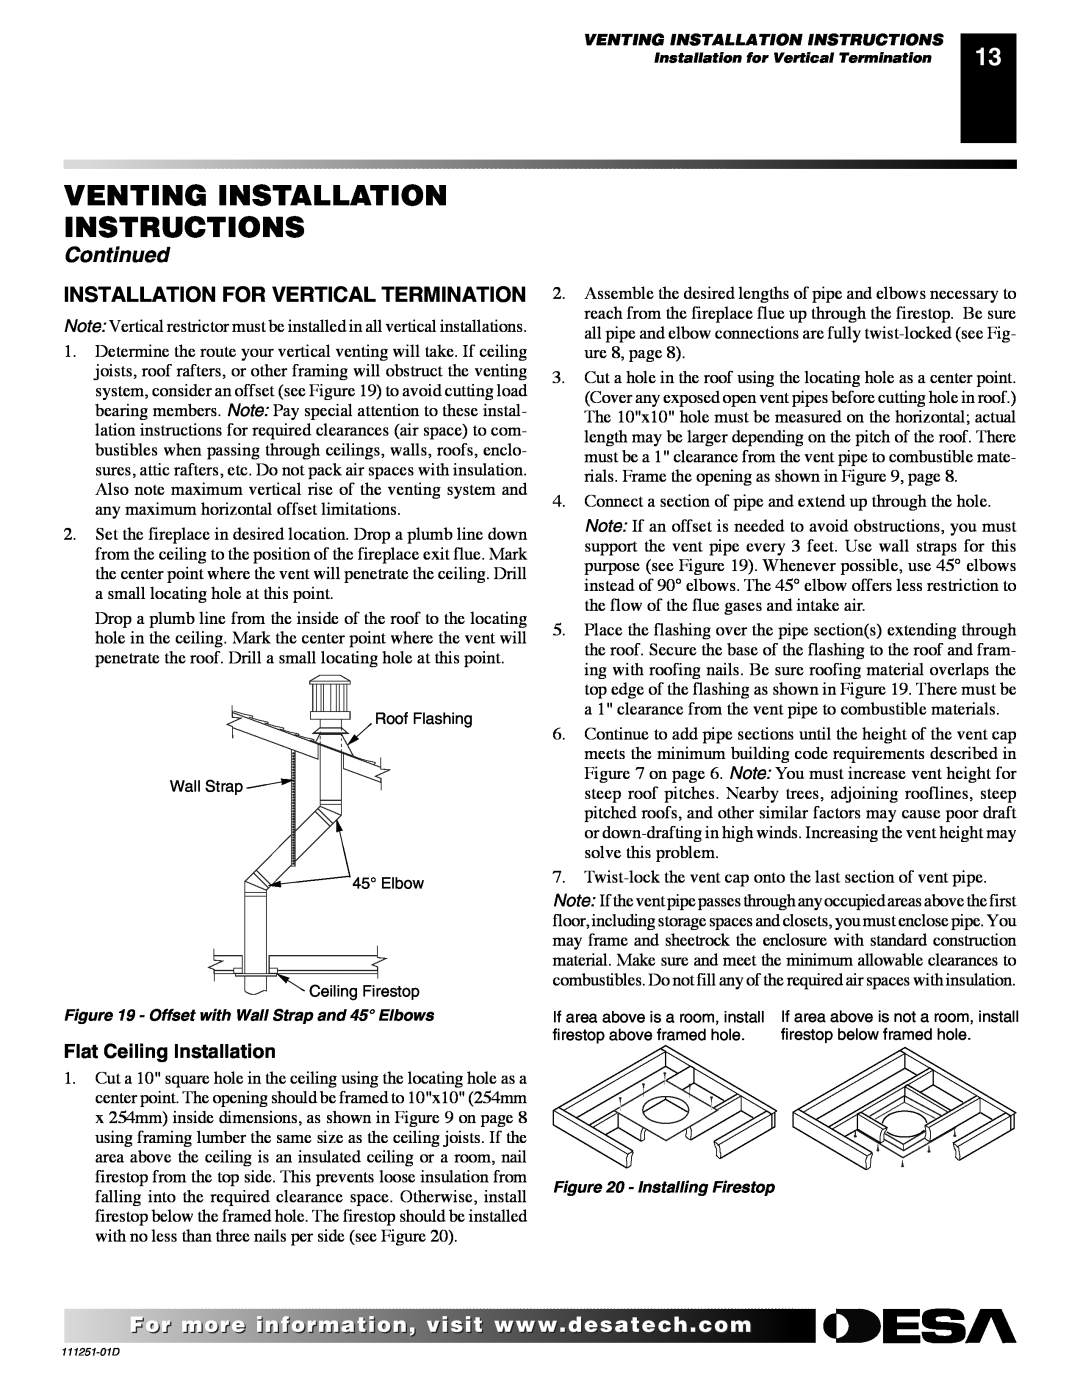 Desa (V)T36ENA SERIES, (V)T36EPA SERIES Venting Installation Instructions, Continued, Flat Ceiling Installation 